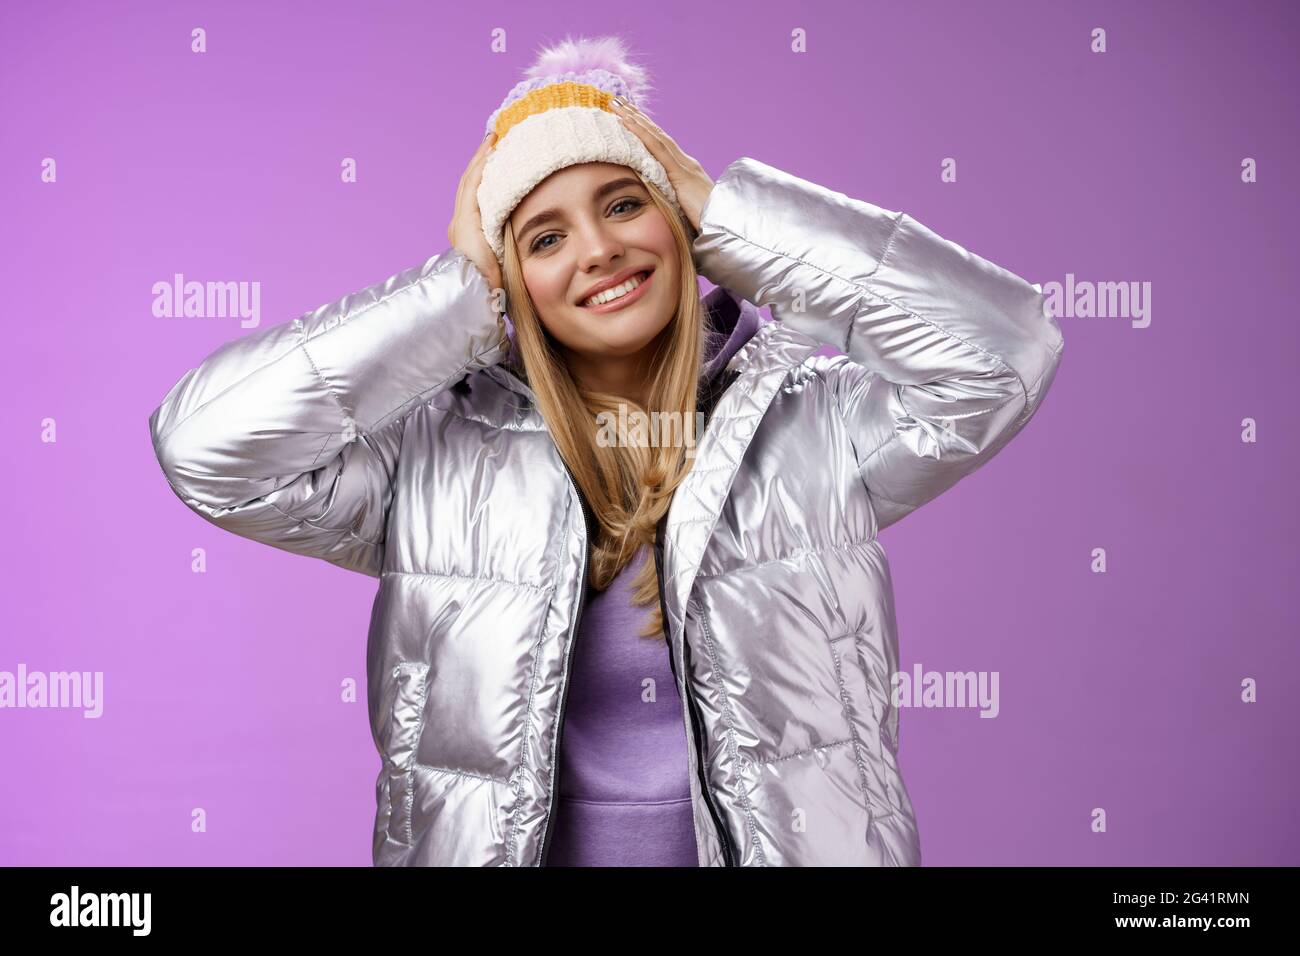 Tender romantic attractive blond female enjoying winter ski resort vacation having fun look pleased smiling broadly tilting head Stock Photo